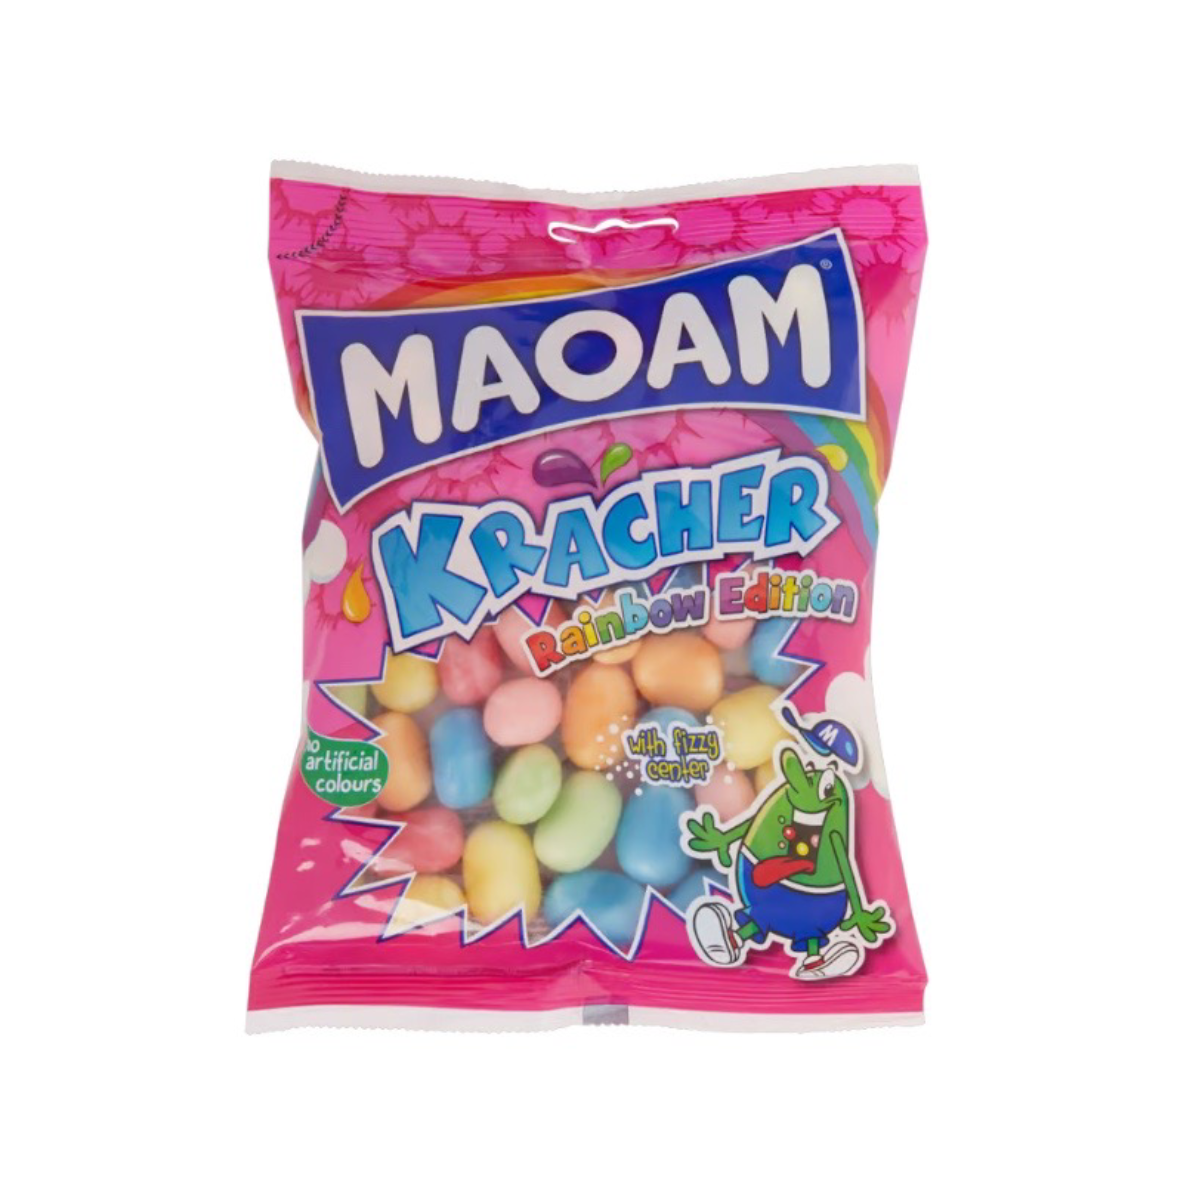 Maoam Kracher Rainbow edition